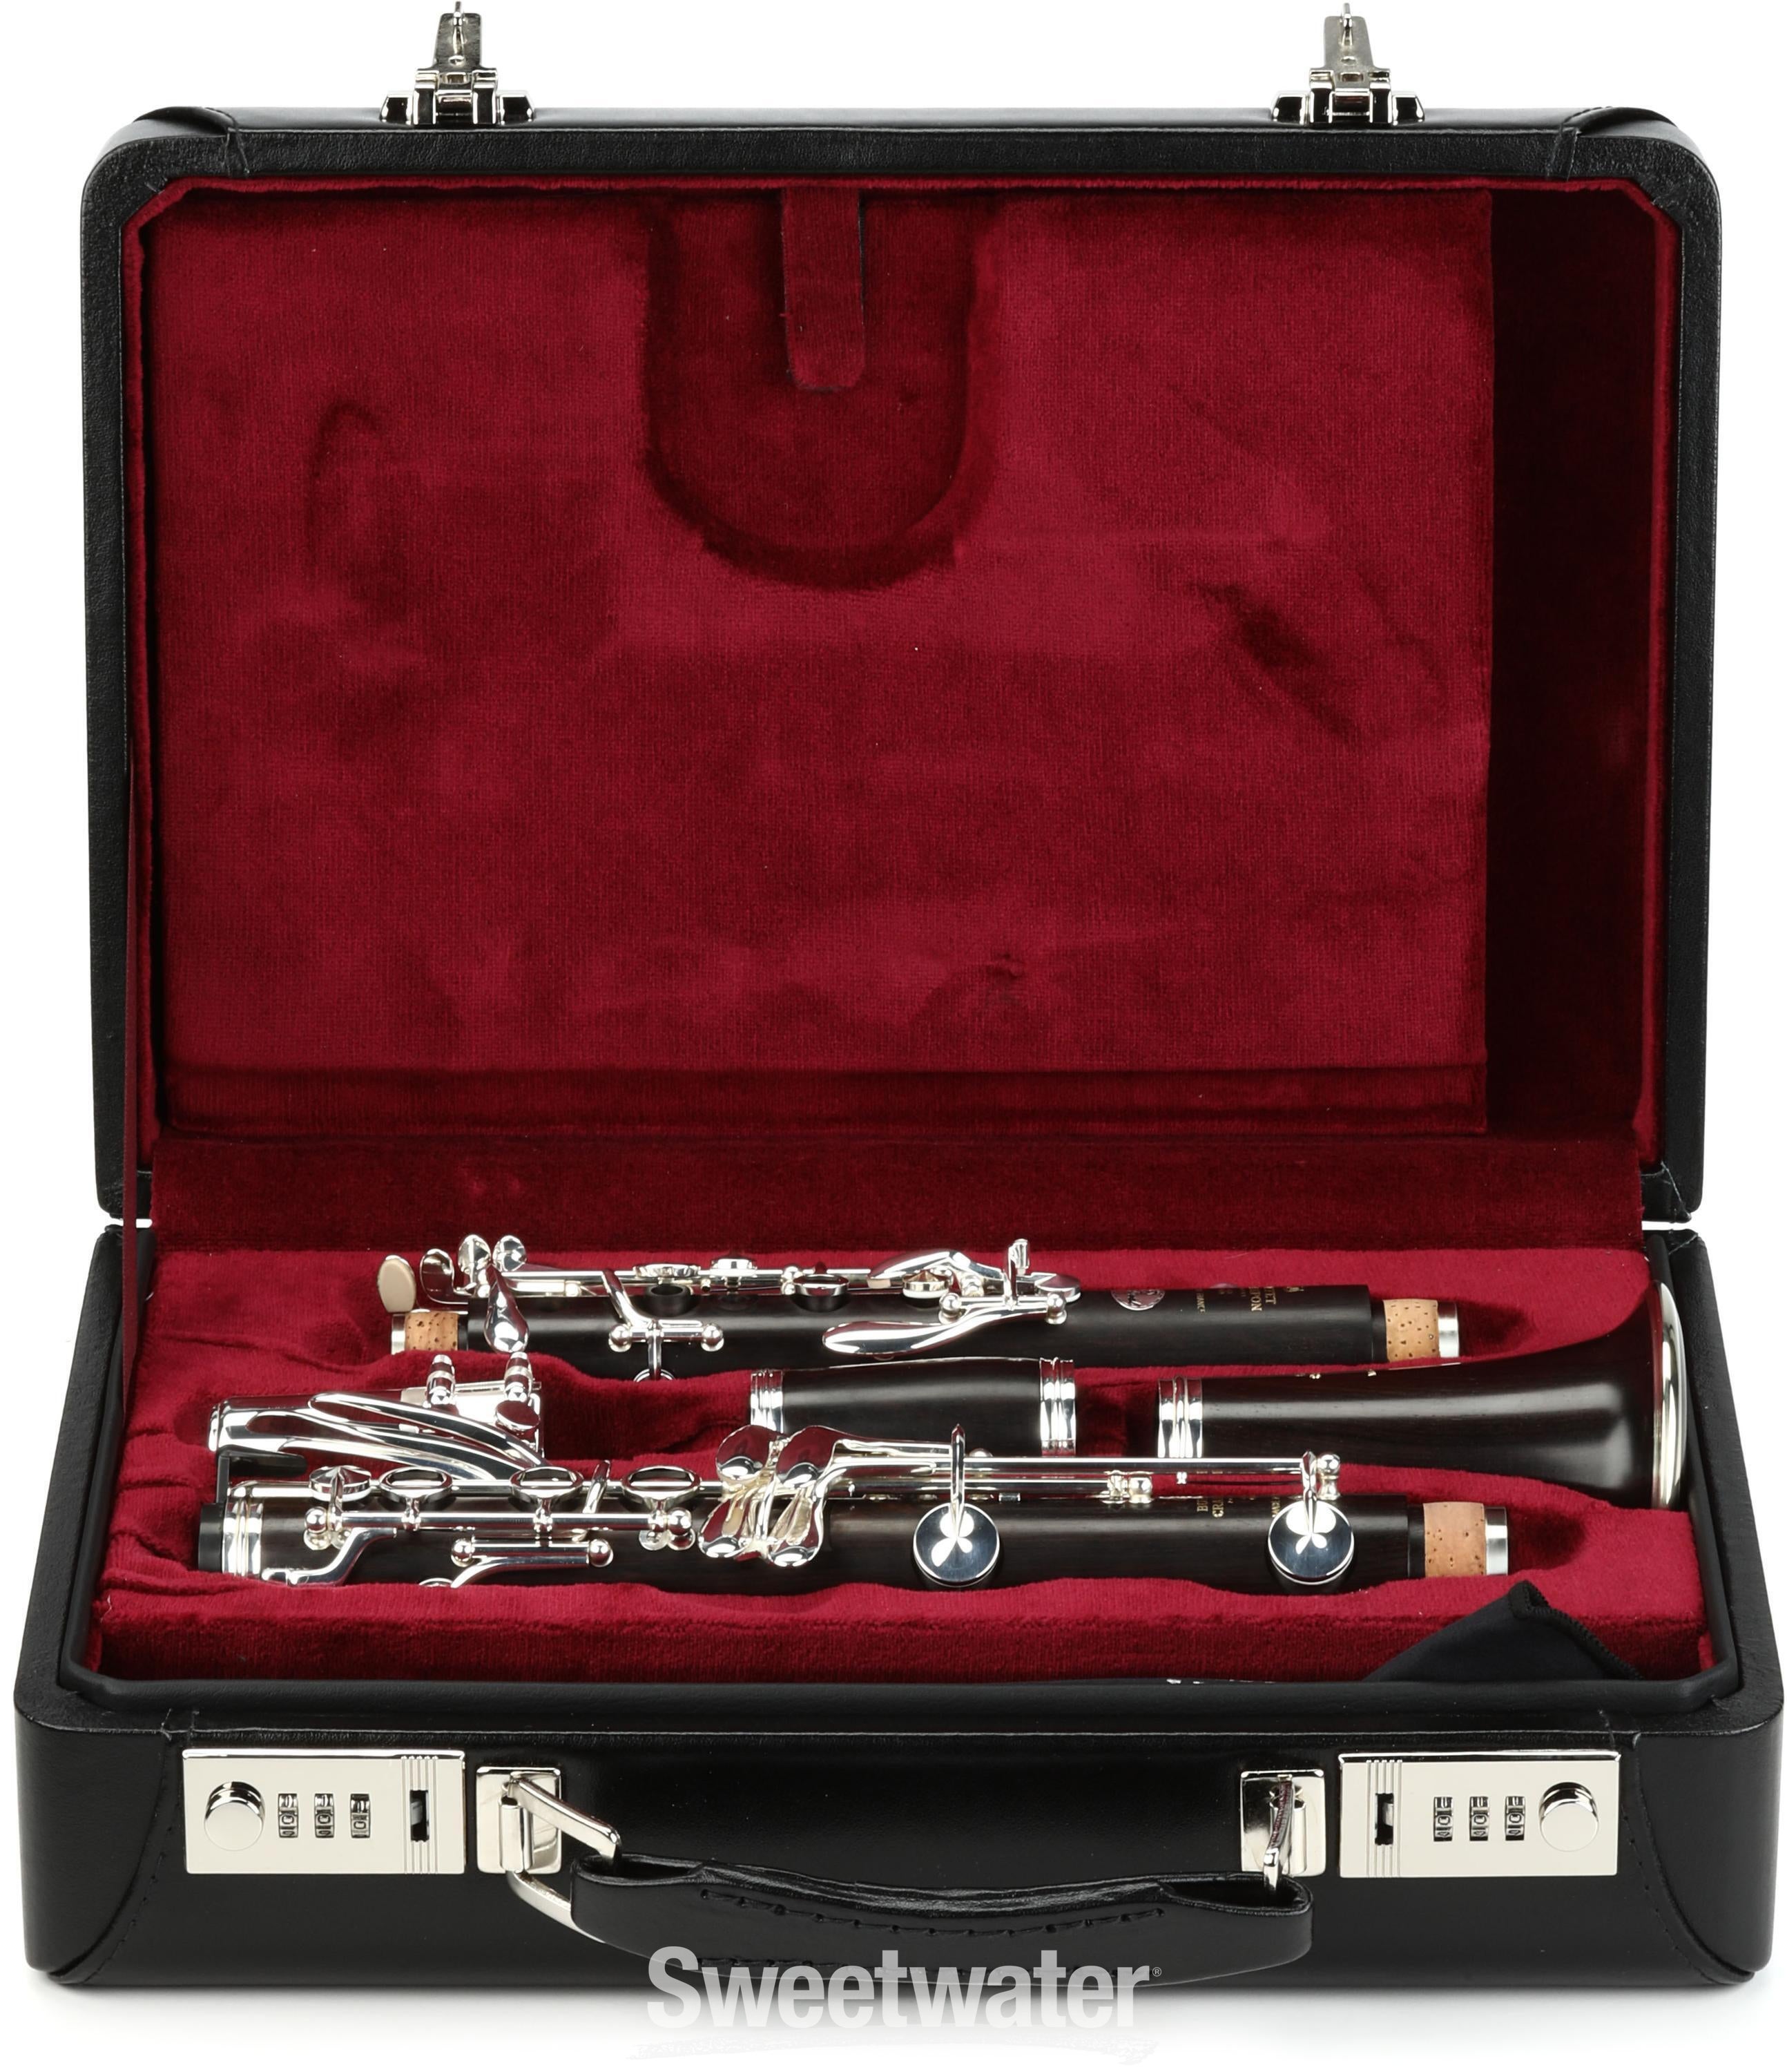 Buffet Crampon R13 Festival Professional Bb Clarinet - Silver-plated Keys